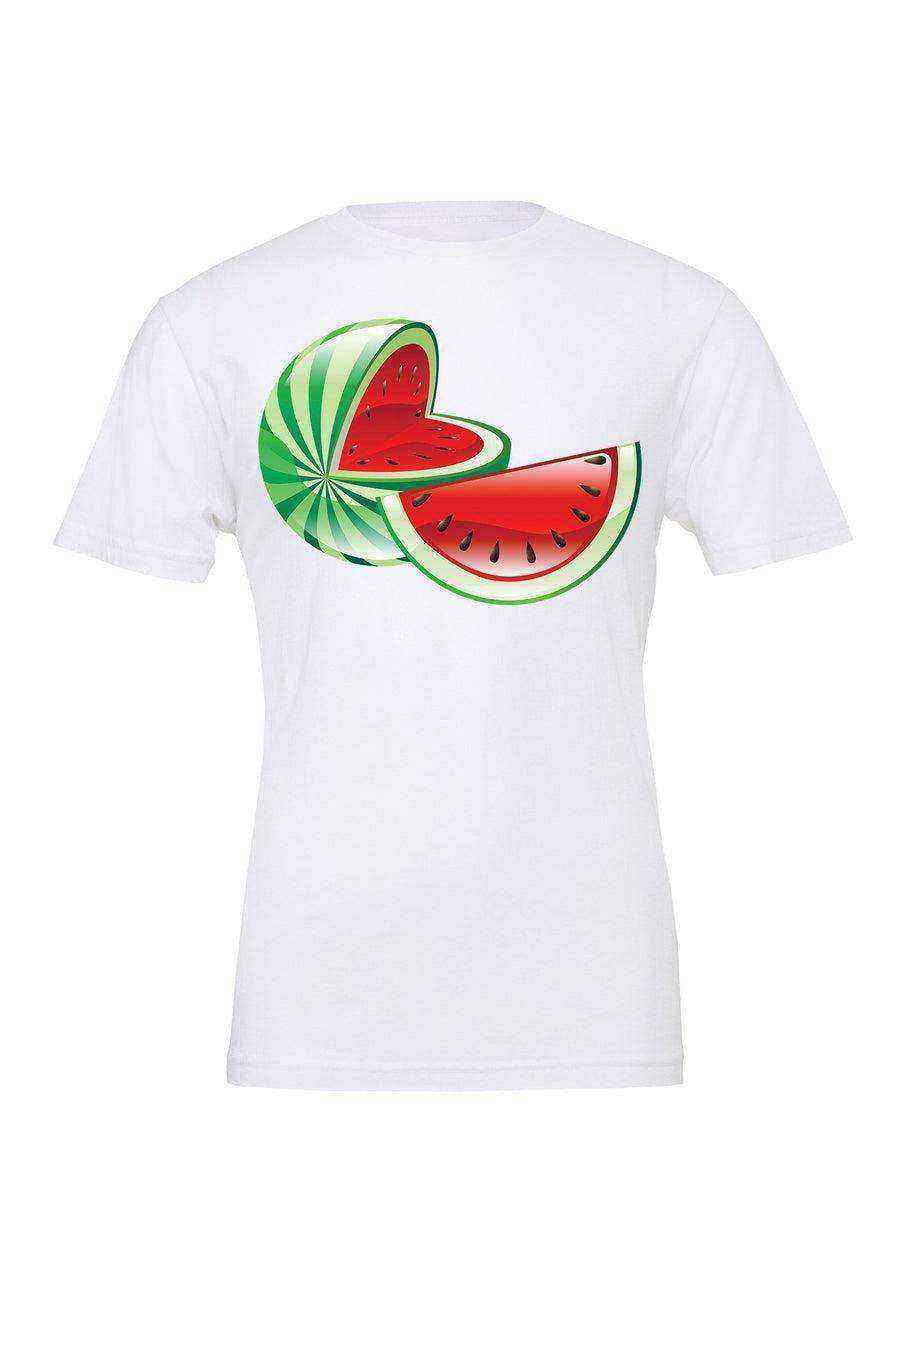 Watermelon Shirt - Dylan's Tees